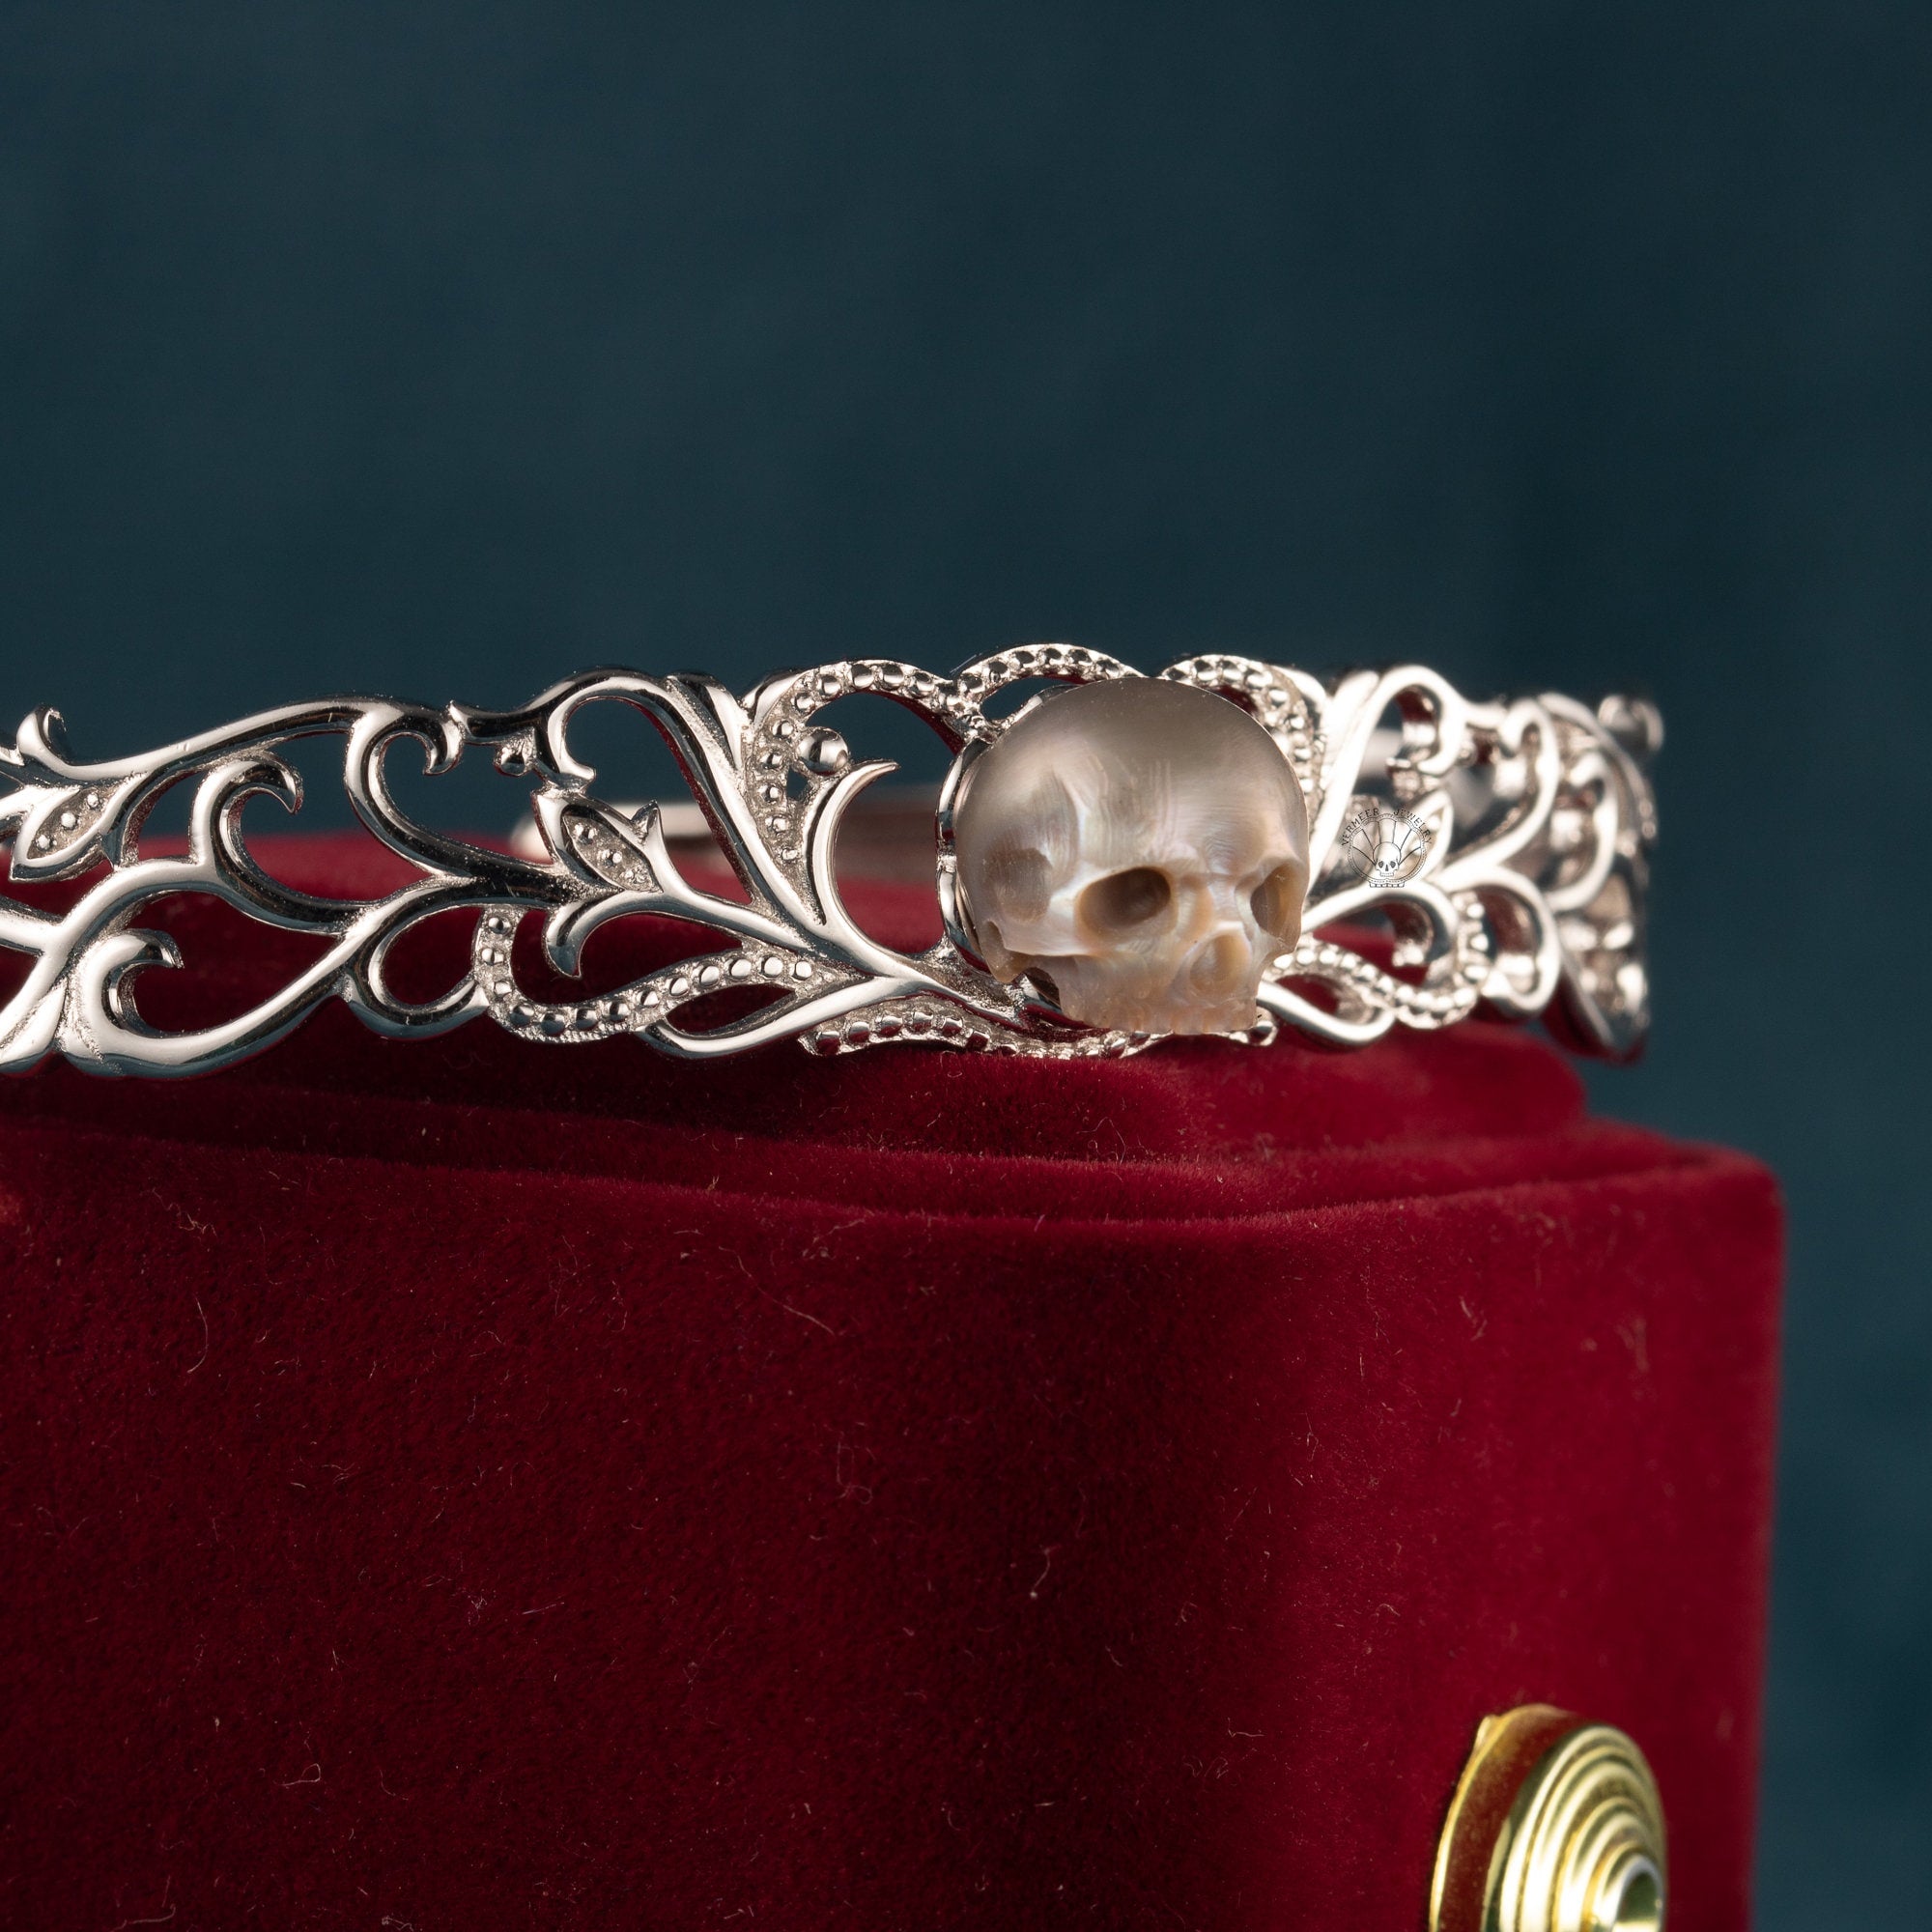 skull carved pearl bracelet handmade flower shape bangle sterling silver gothic jewelry for lover